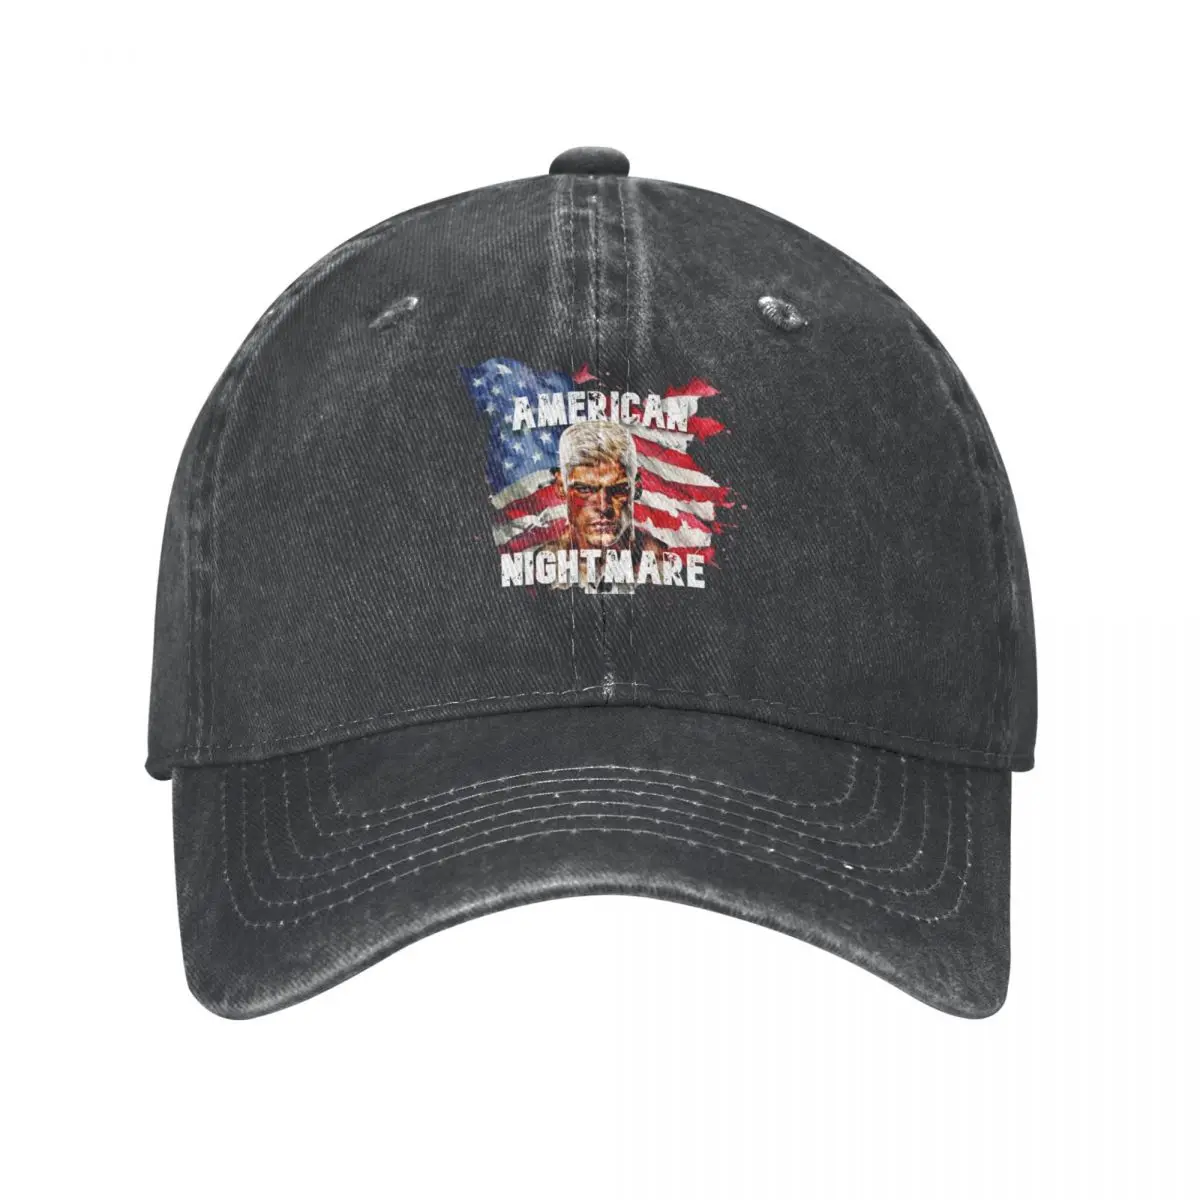 

Vintage USA Wrestling Cody Rhodes Trucker Hat Unisex Distressed Denim Washed Cap The American Nightmare Outdoor Activities Cap